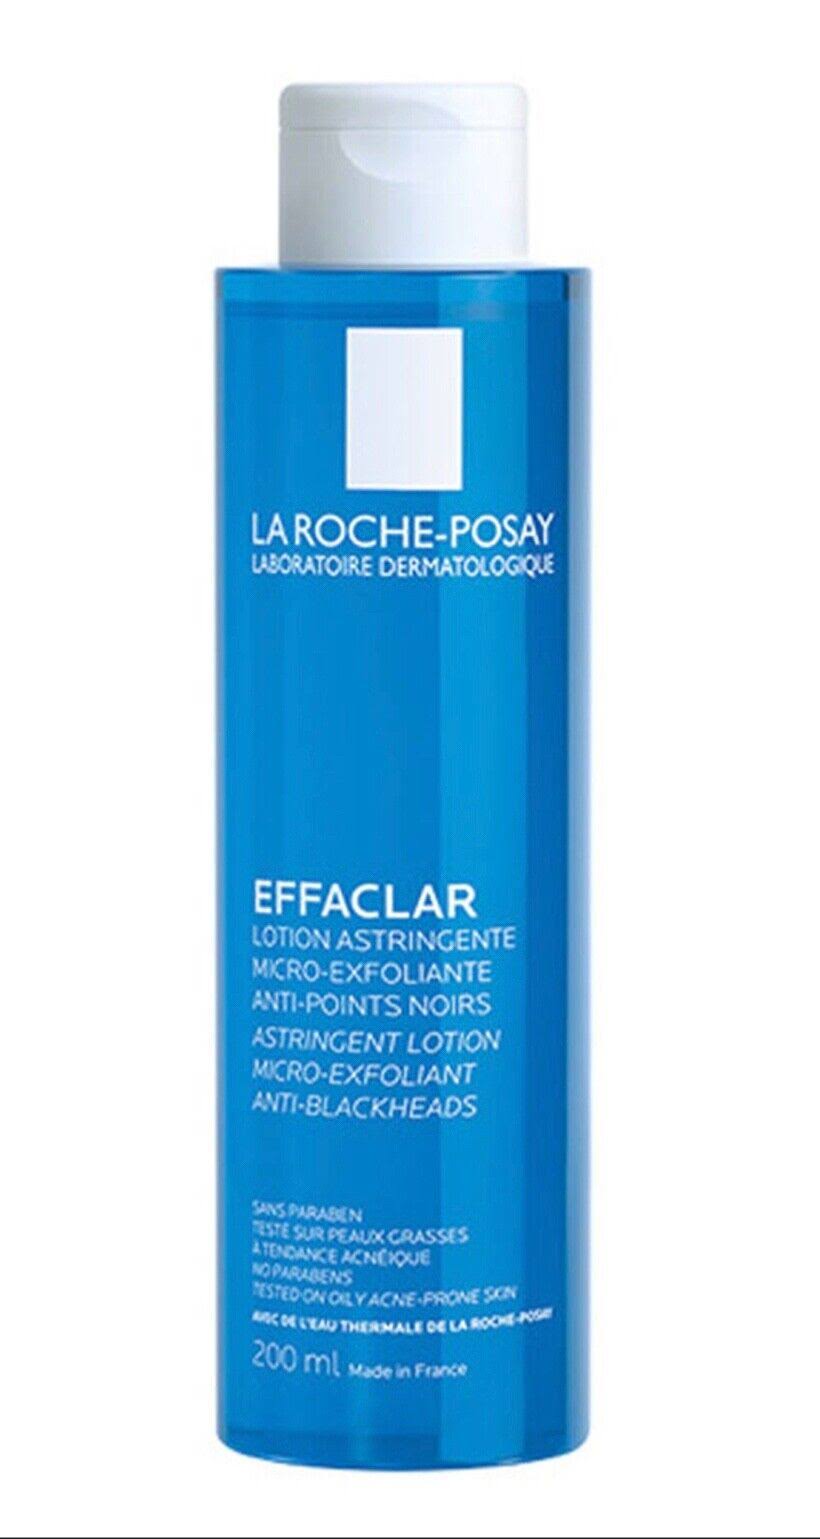 La Roche Posay Effaclar Astringent Lotion 200 ml